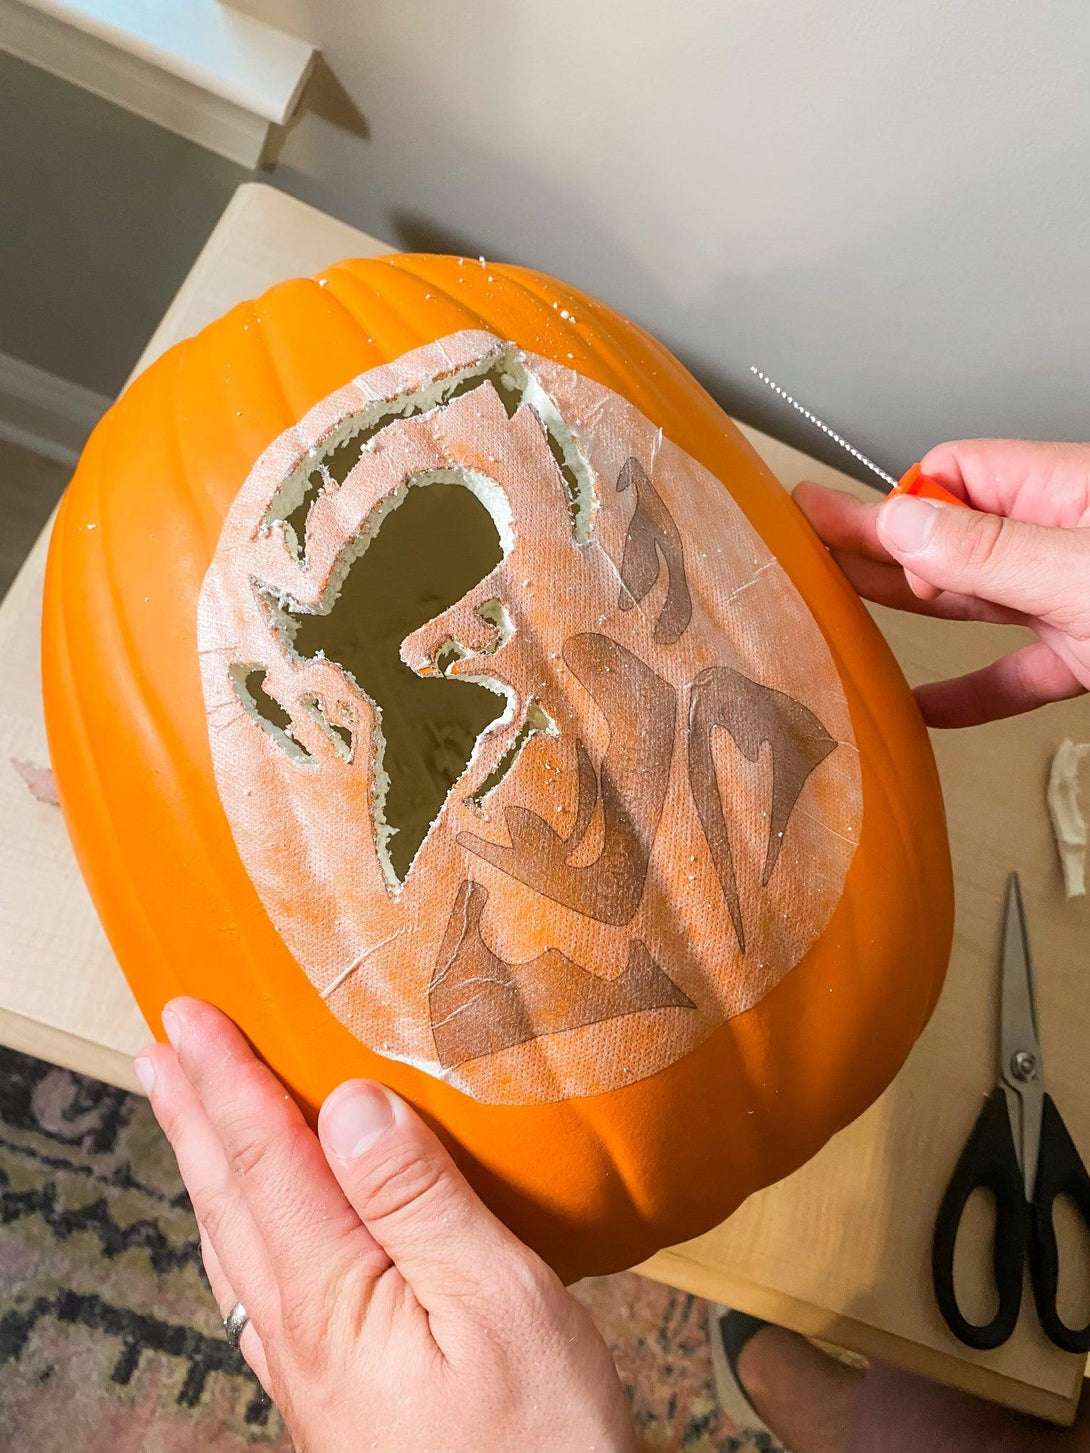 I Heart WY Pumpkin Carving Stencil - Pumpkin HQ